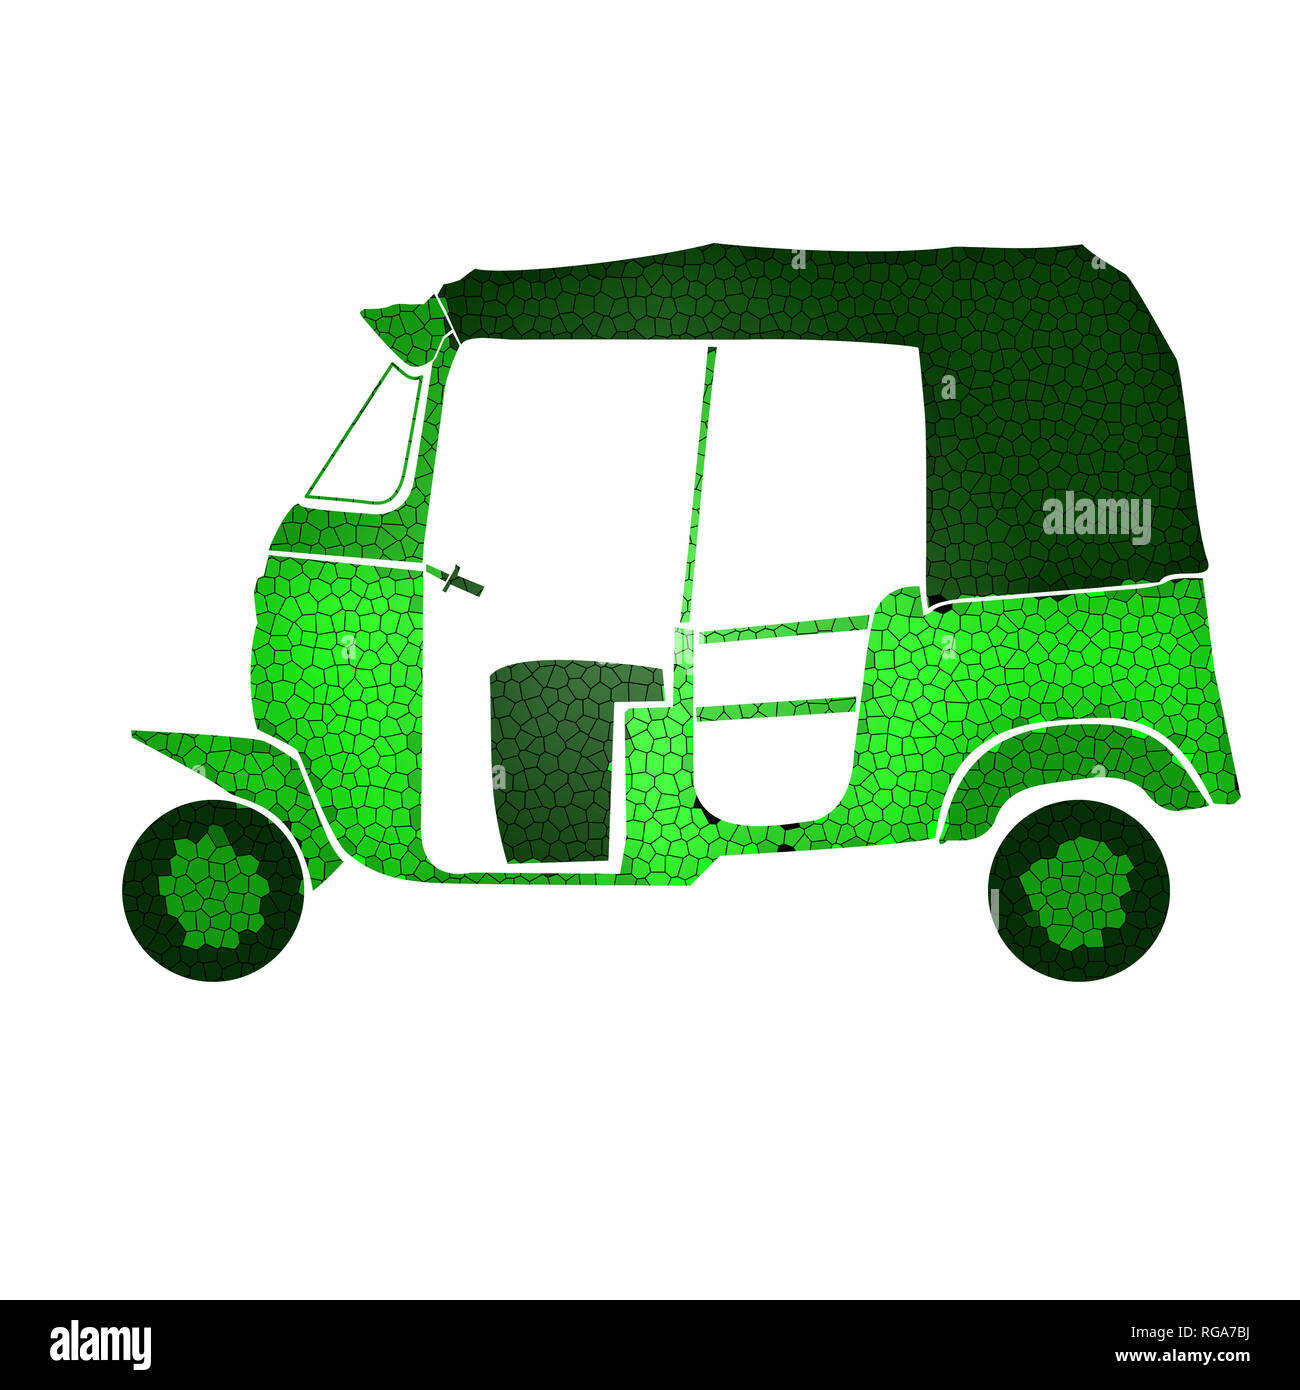 Green auto riickshaw icon. Idea for the fridge souvenir magnet, stamp or sticker label Stock Photo